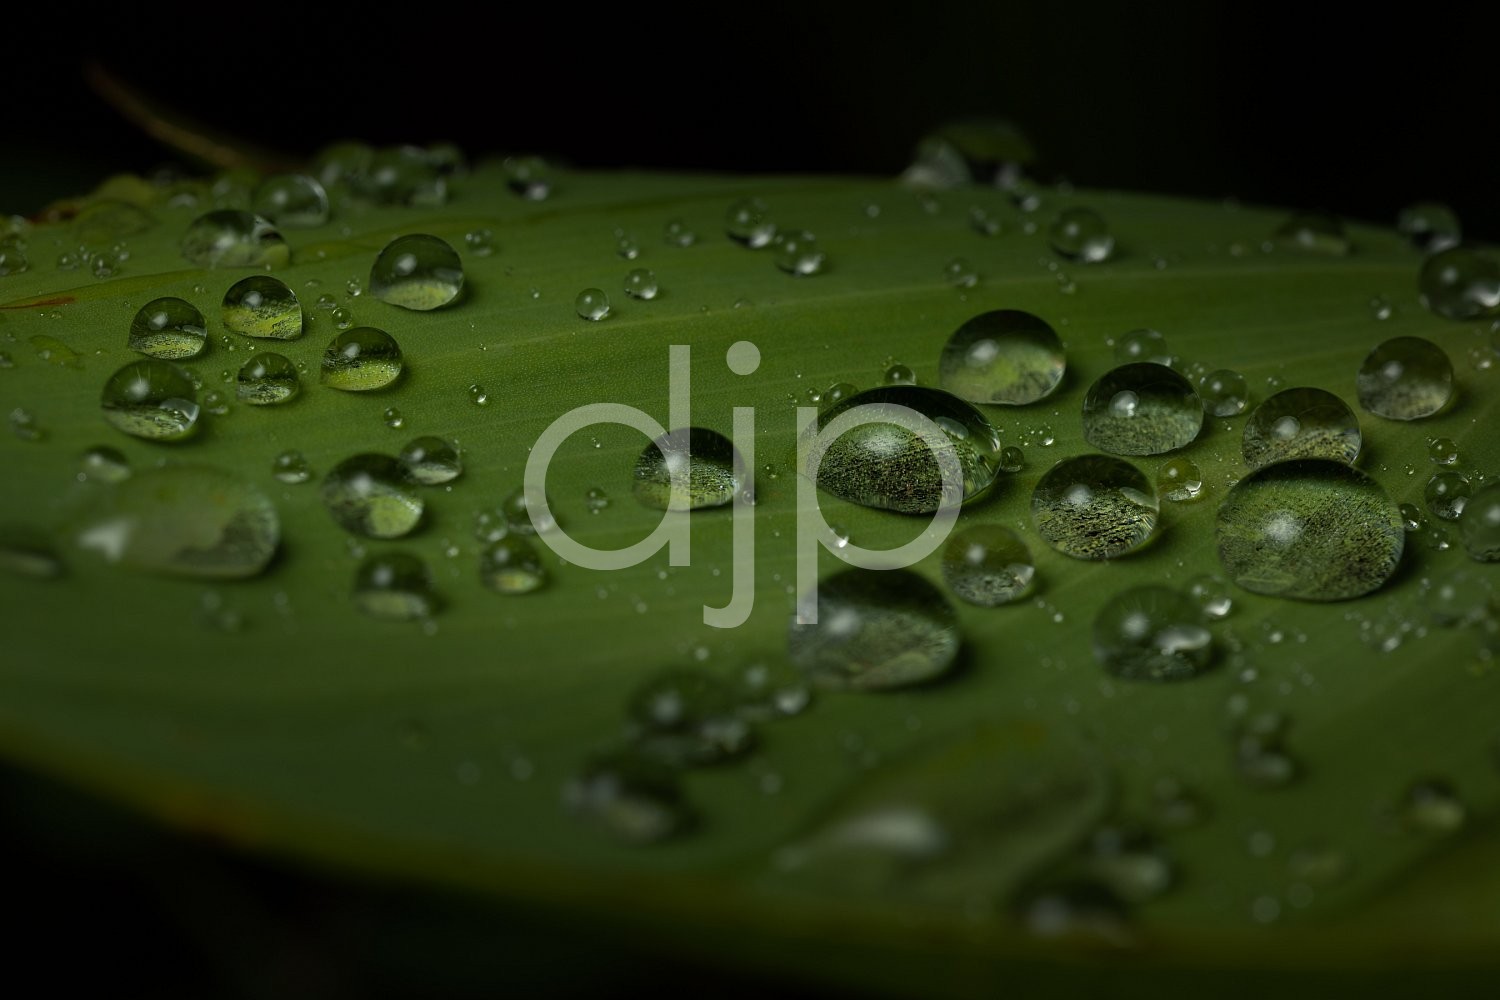 Sugar Land, djonesphoto, droplets, excursions with djp, green, leaf, macro, personal, quarantine, water, D Jones Photography